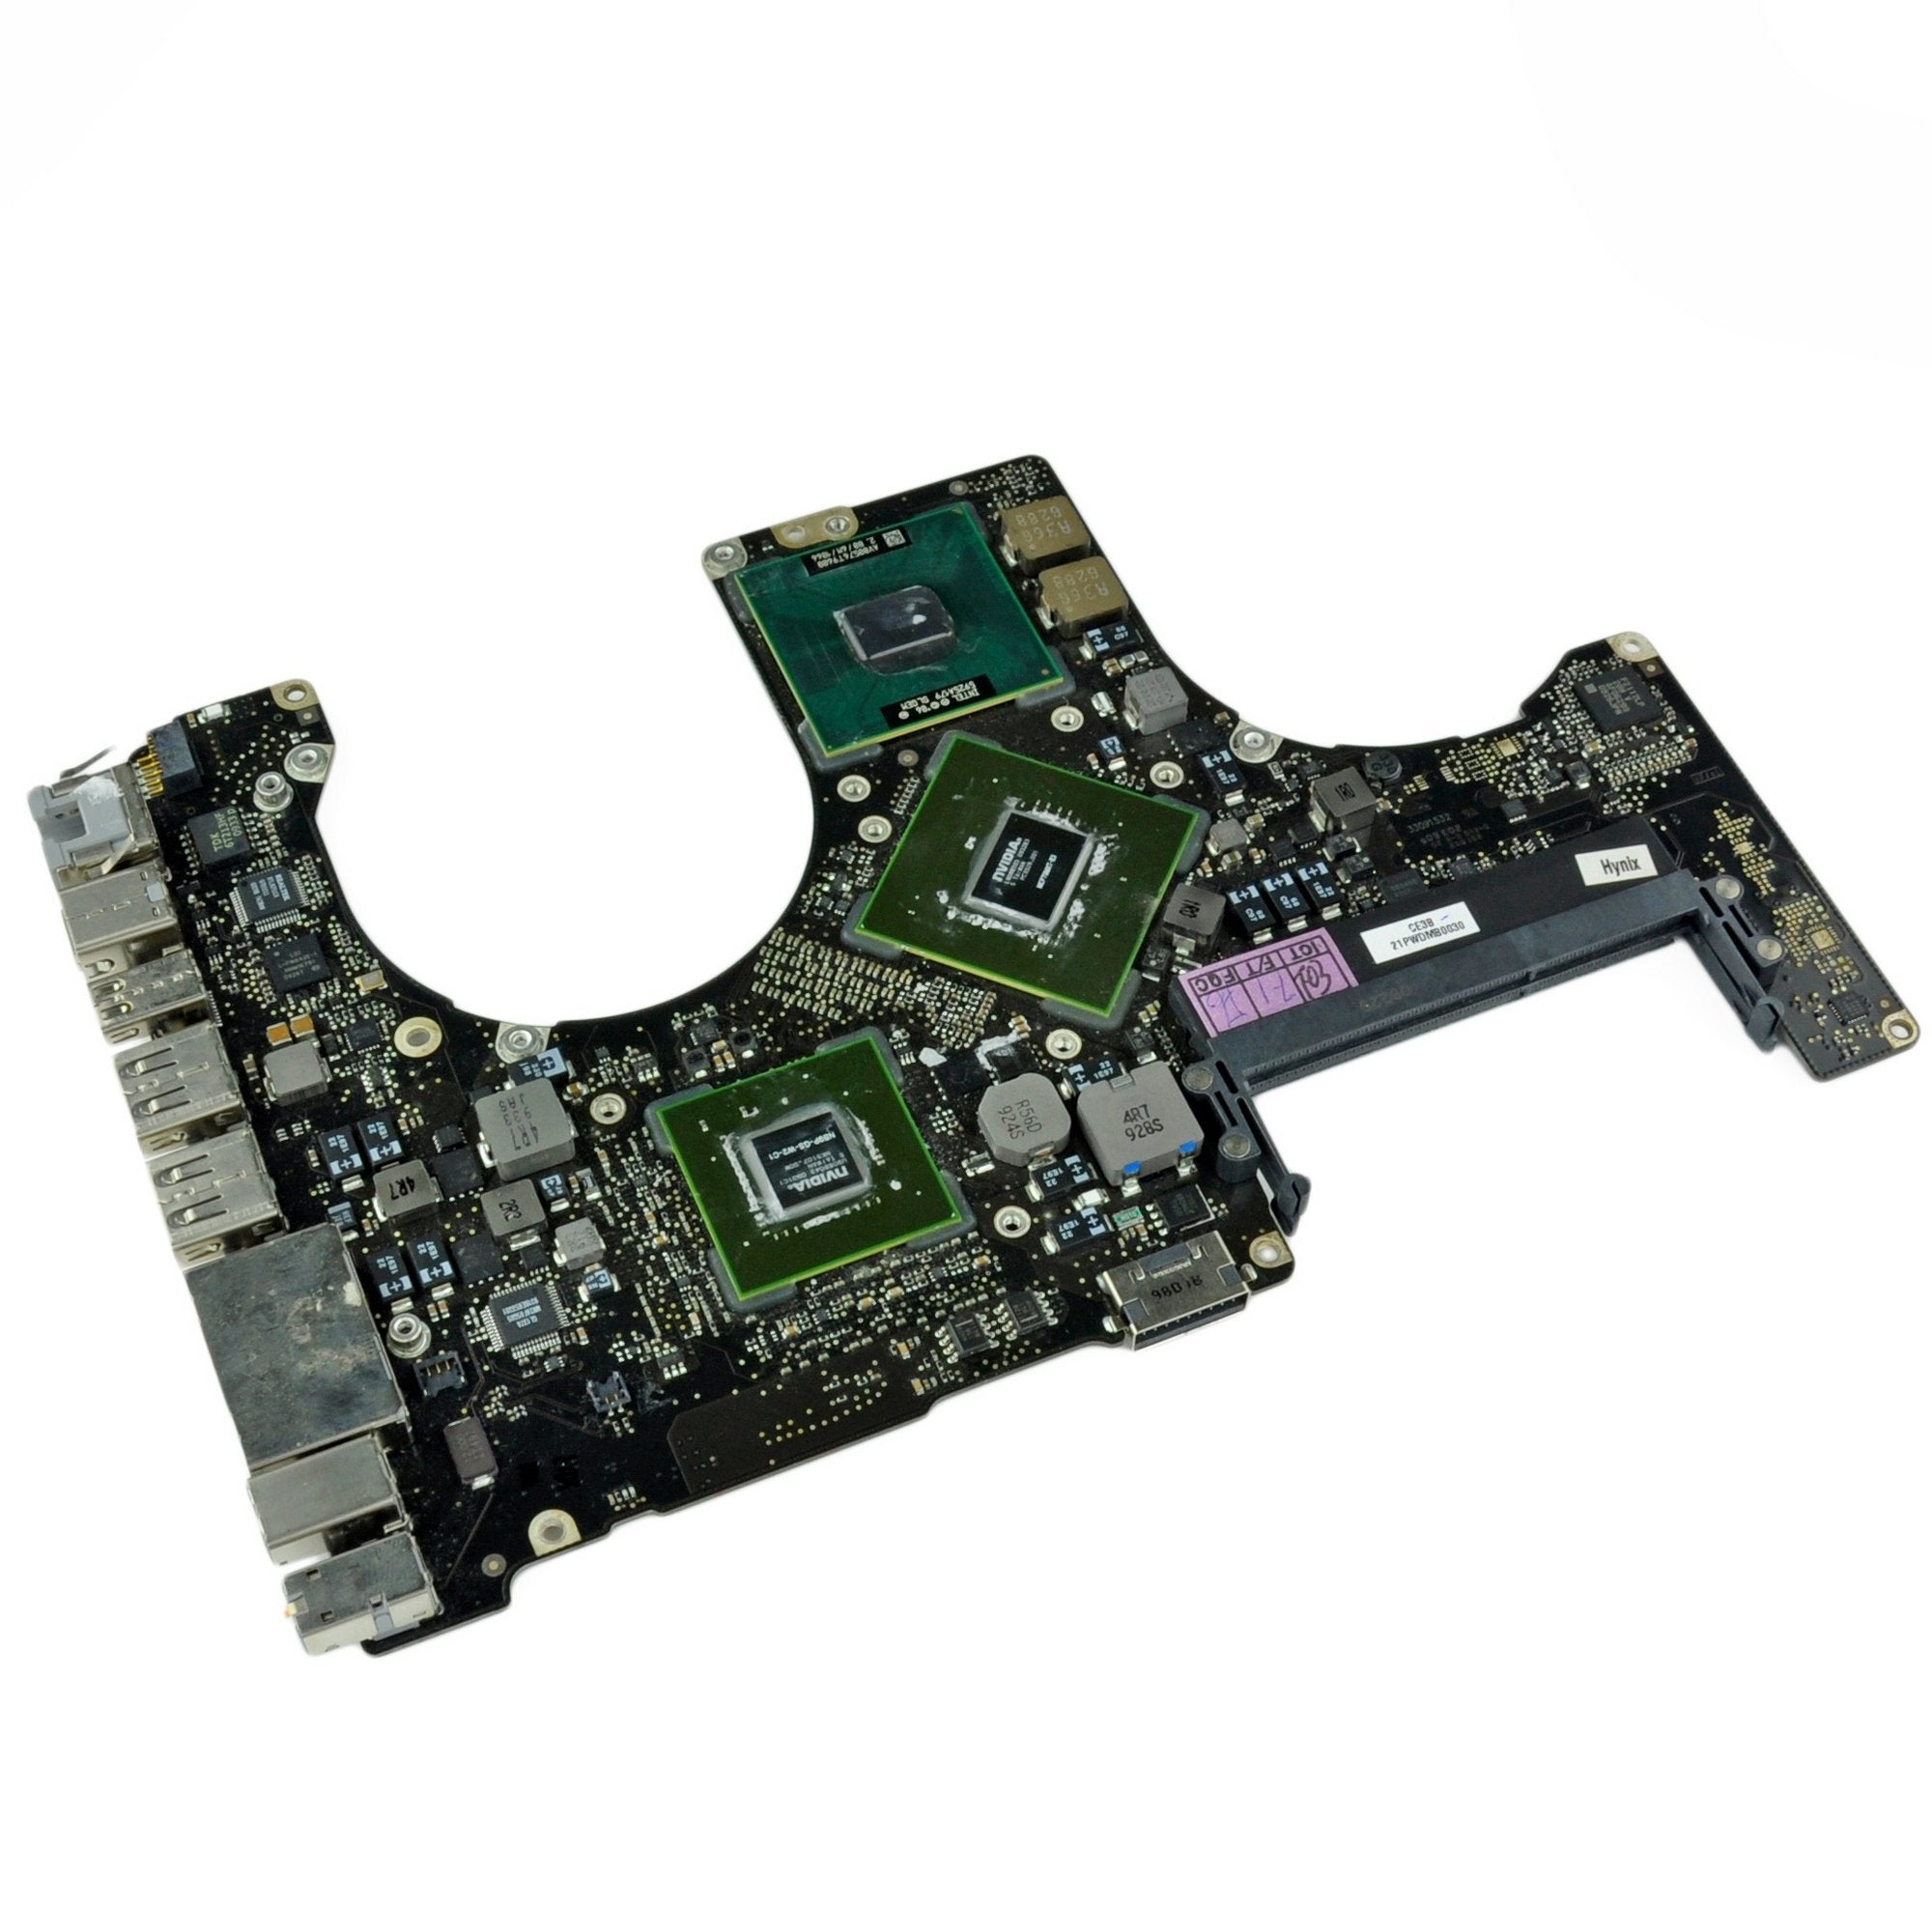 MacBook Pro 15" Unibody (Mid 2009) 2.8 GHz Logic Board